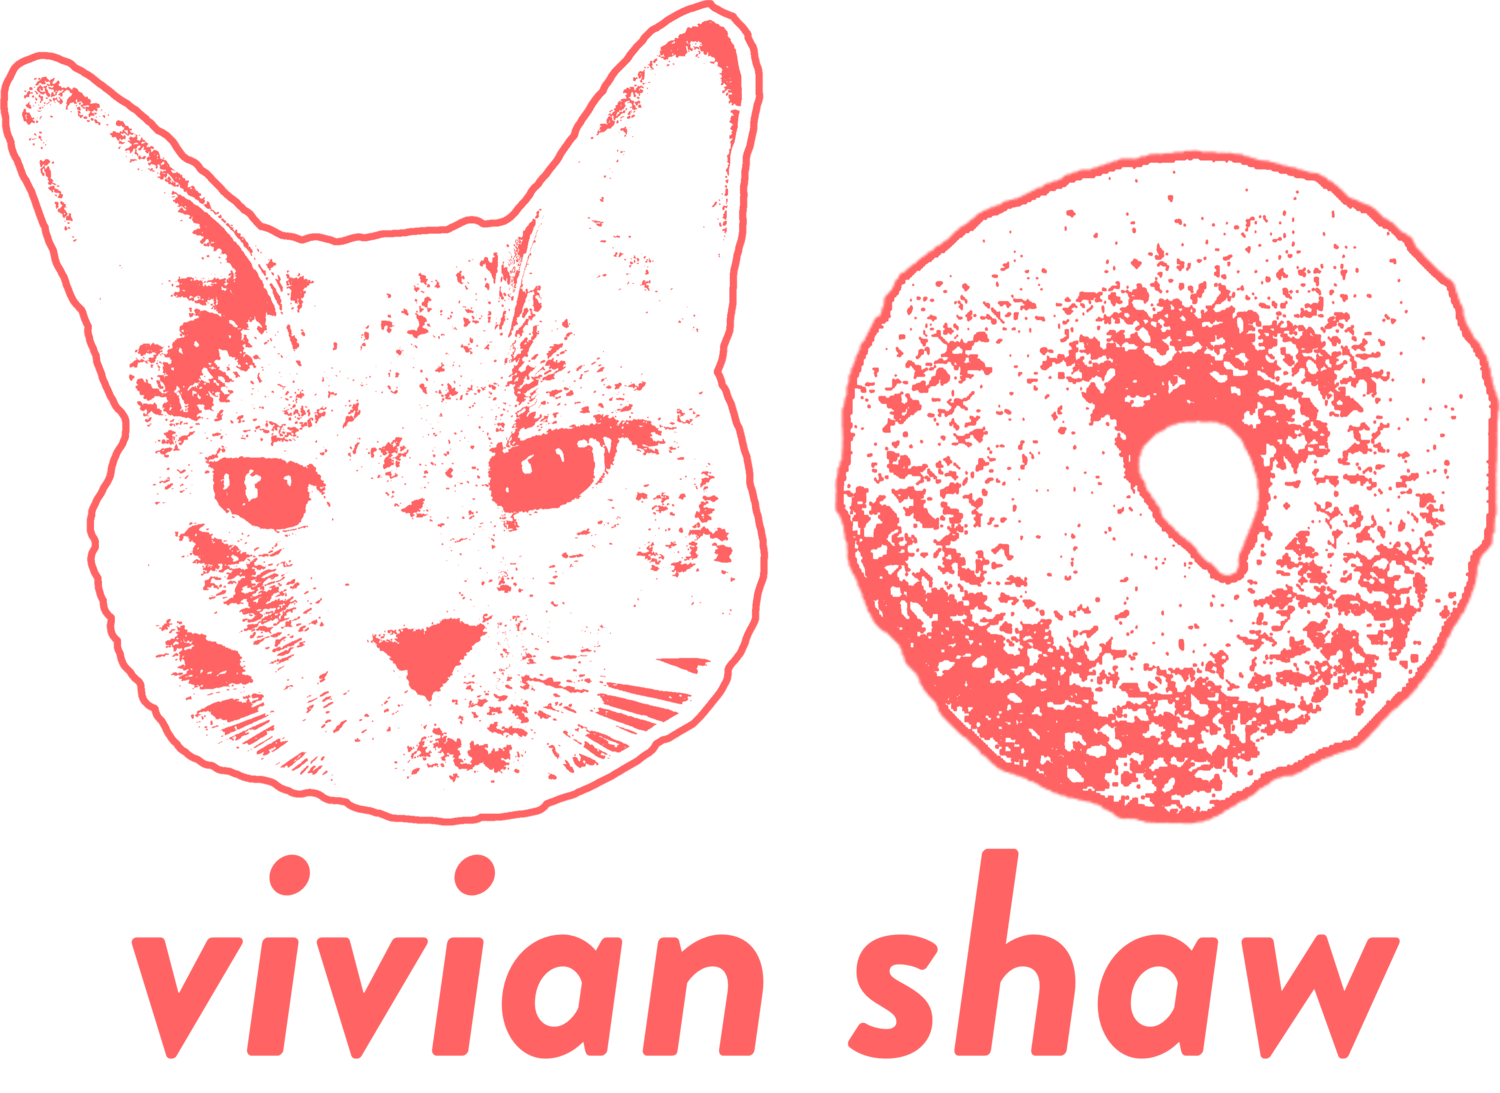 vivian shaw